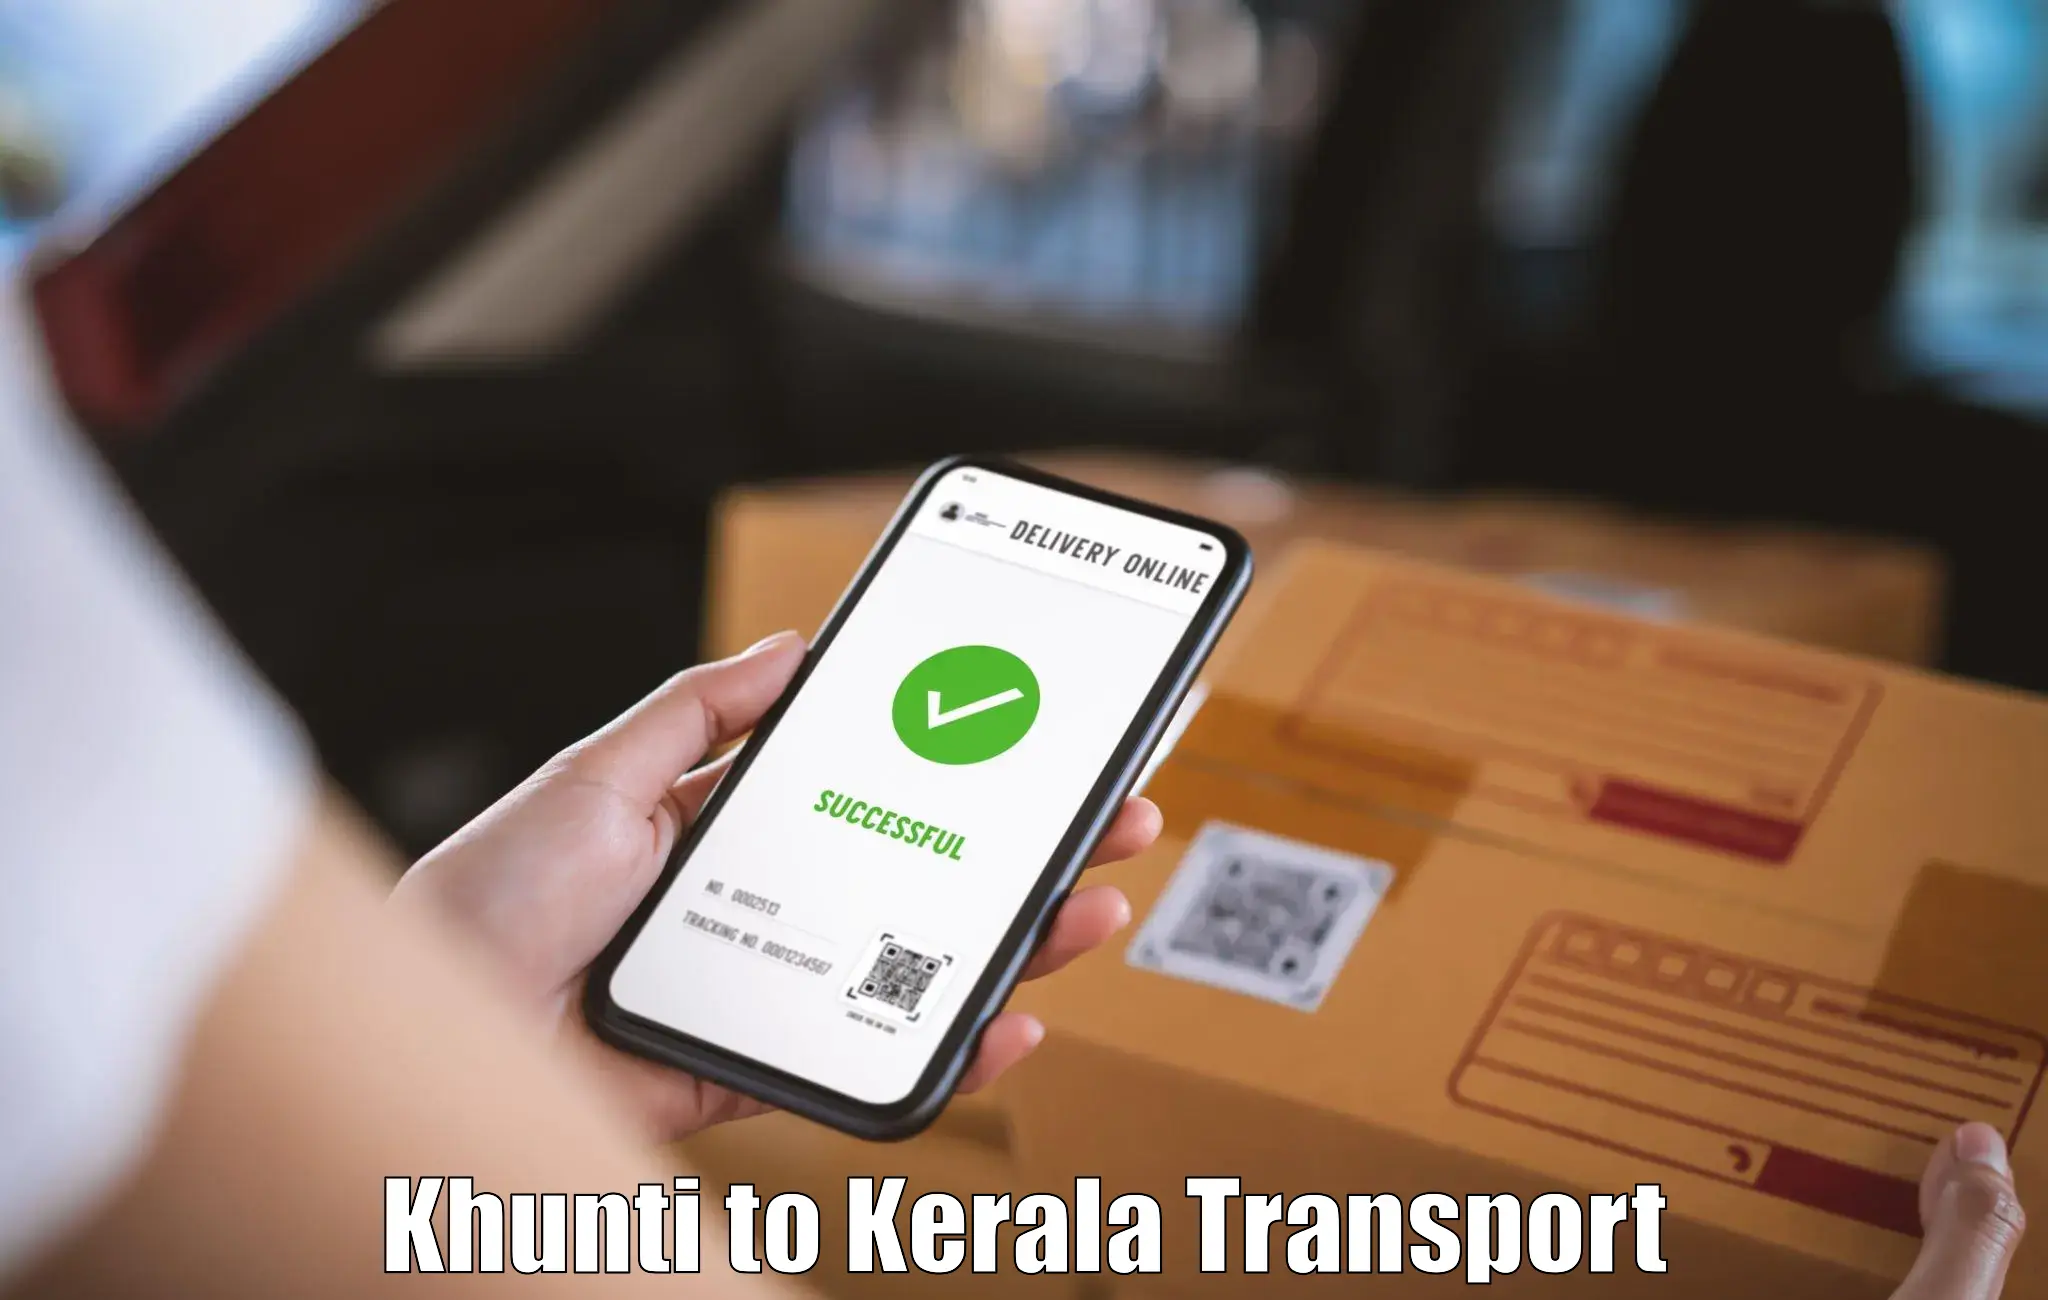 Transport in sharing Khunti to Kazhakkoottam